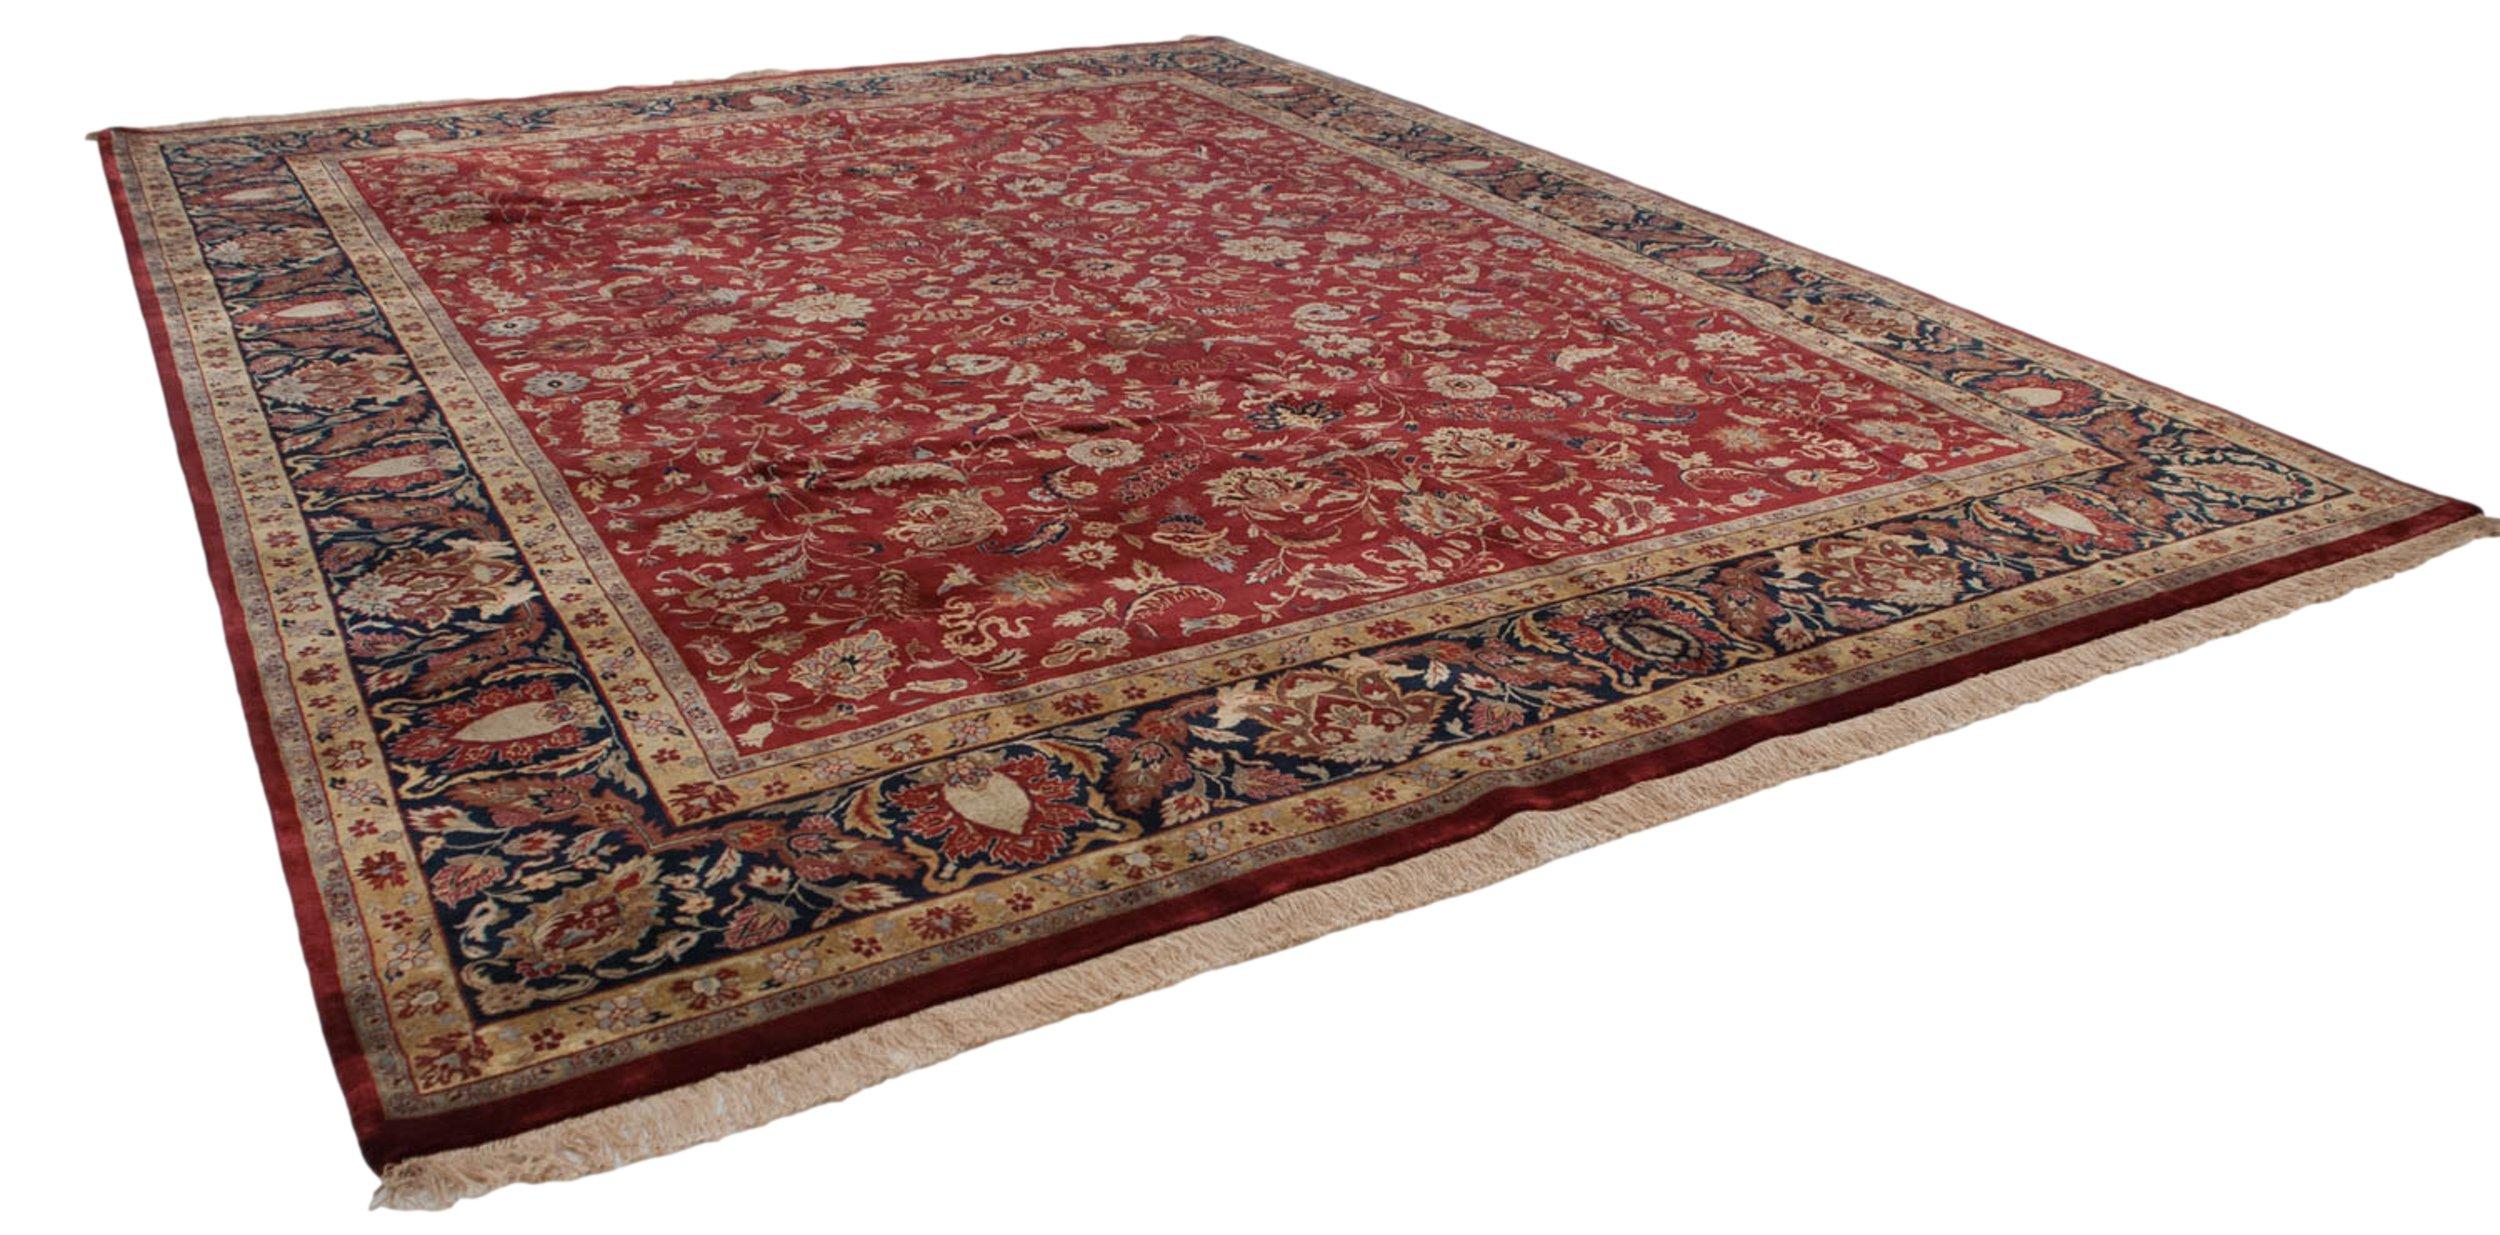 Other Fine Indian Mohajeran Sarouk Design Carpet For Sale